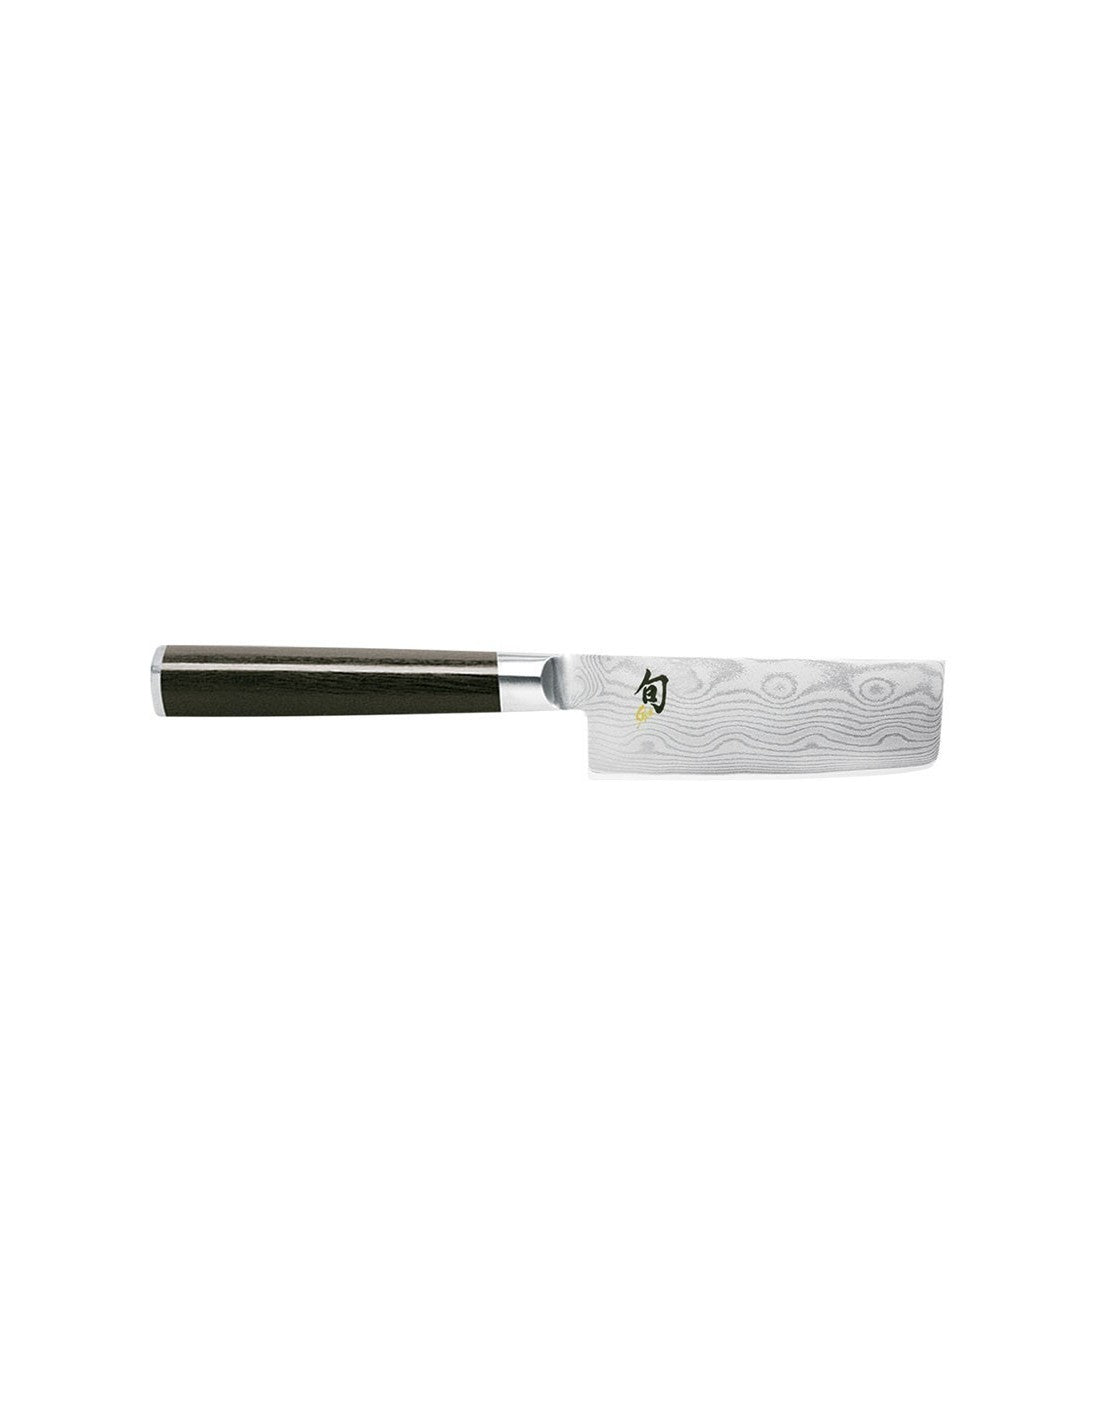 Shun Classic NAKIRI Kitchen Knife 4-Inch [DM0733]